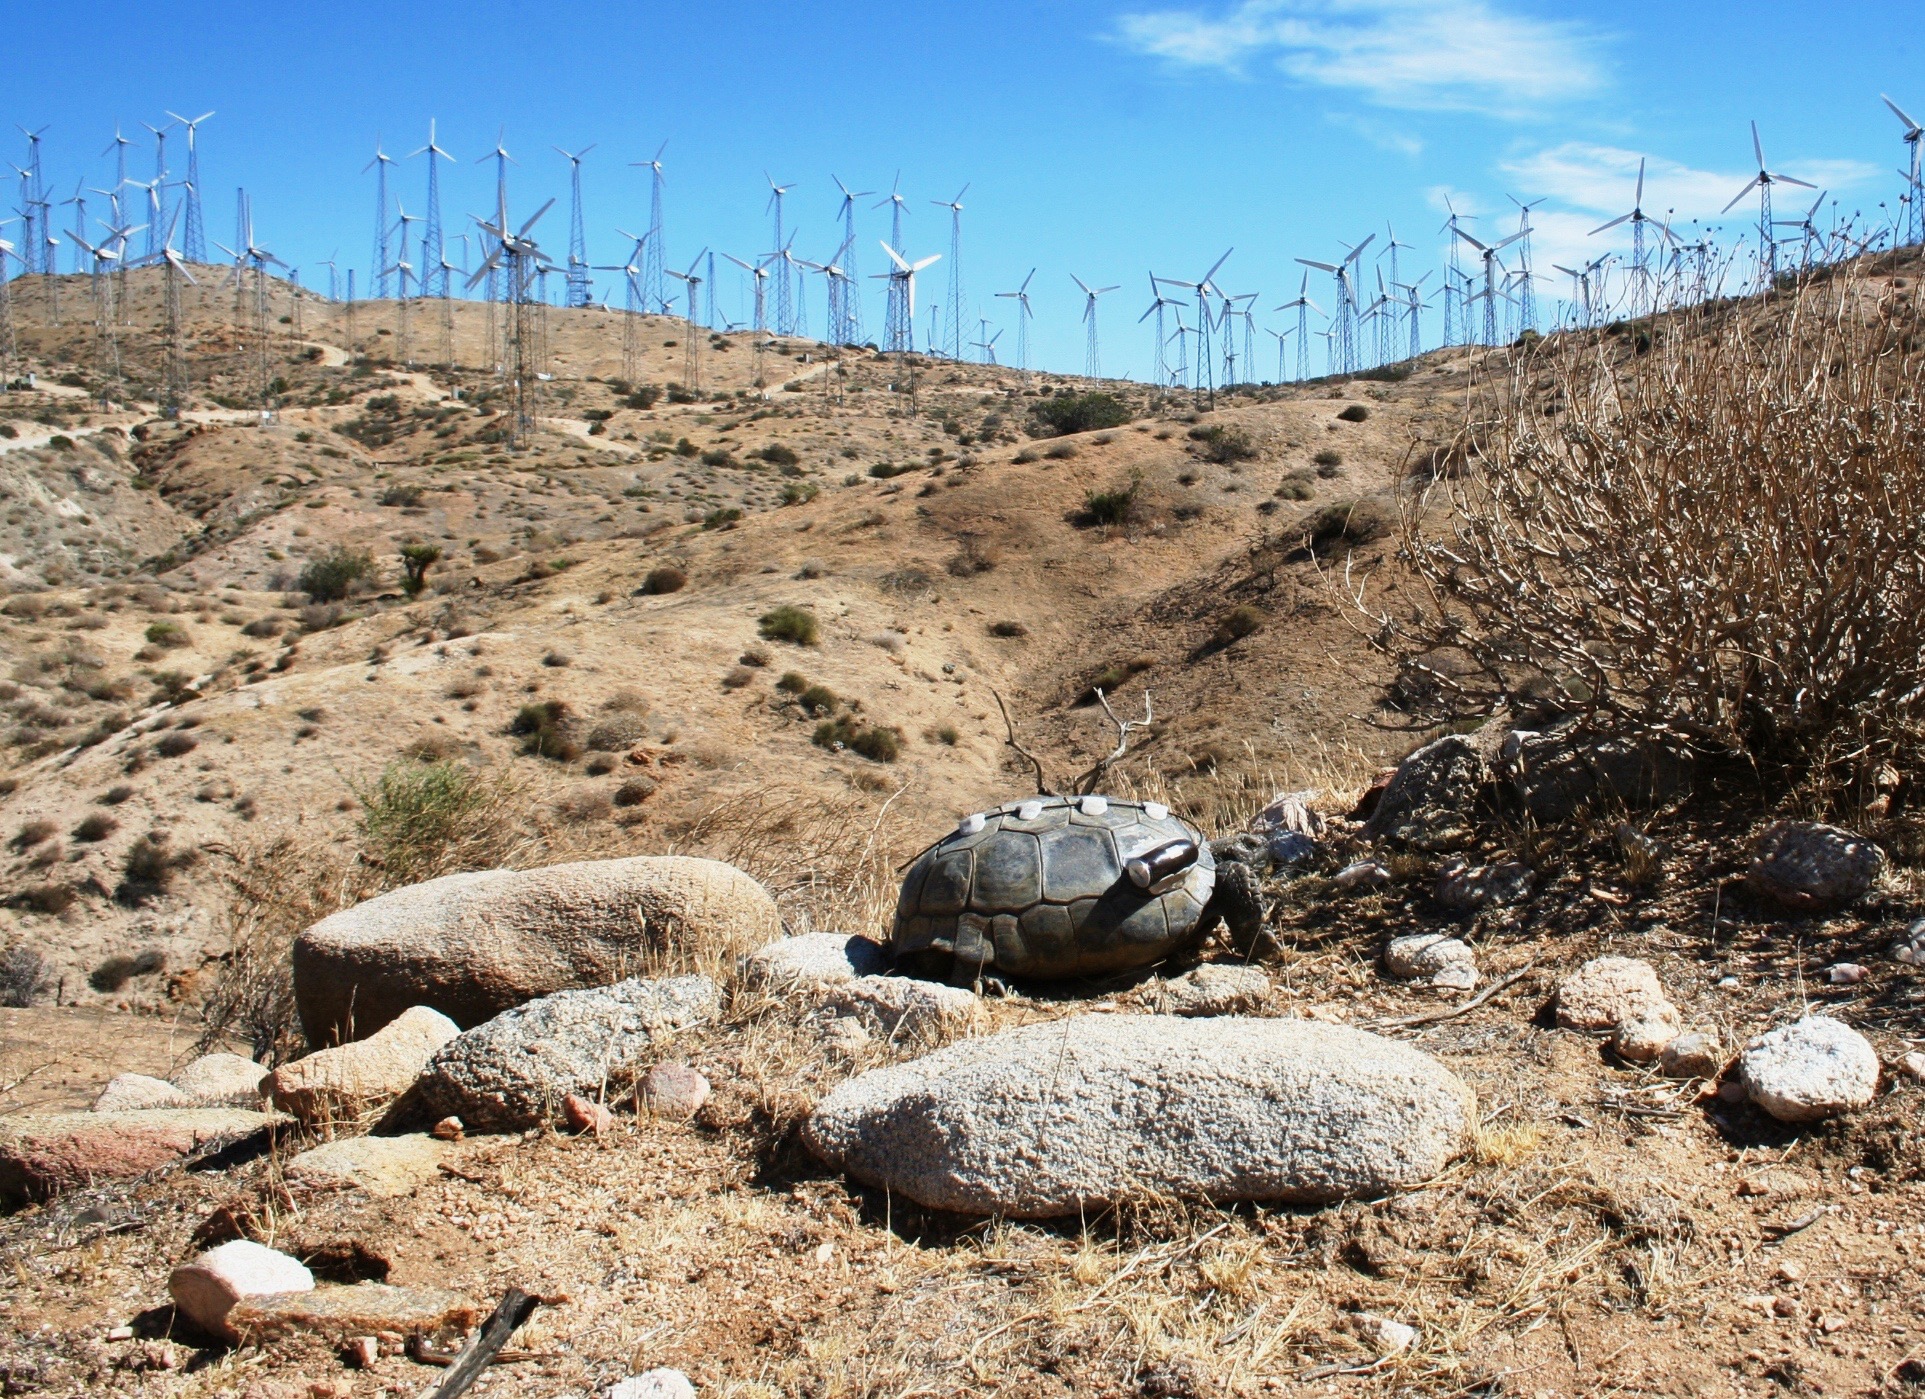 Desert tortoise with radio tracking device